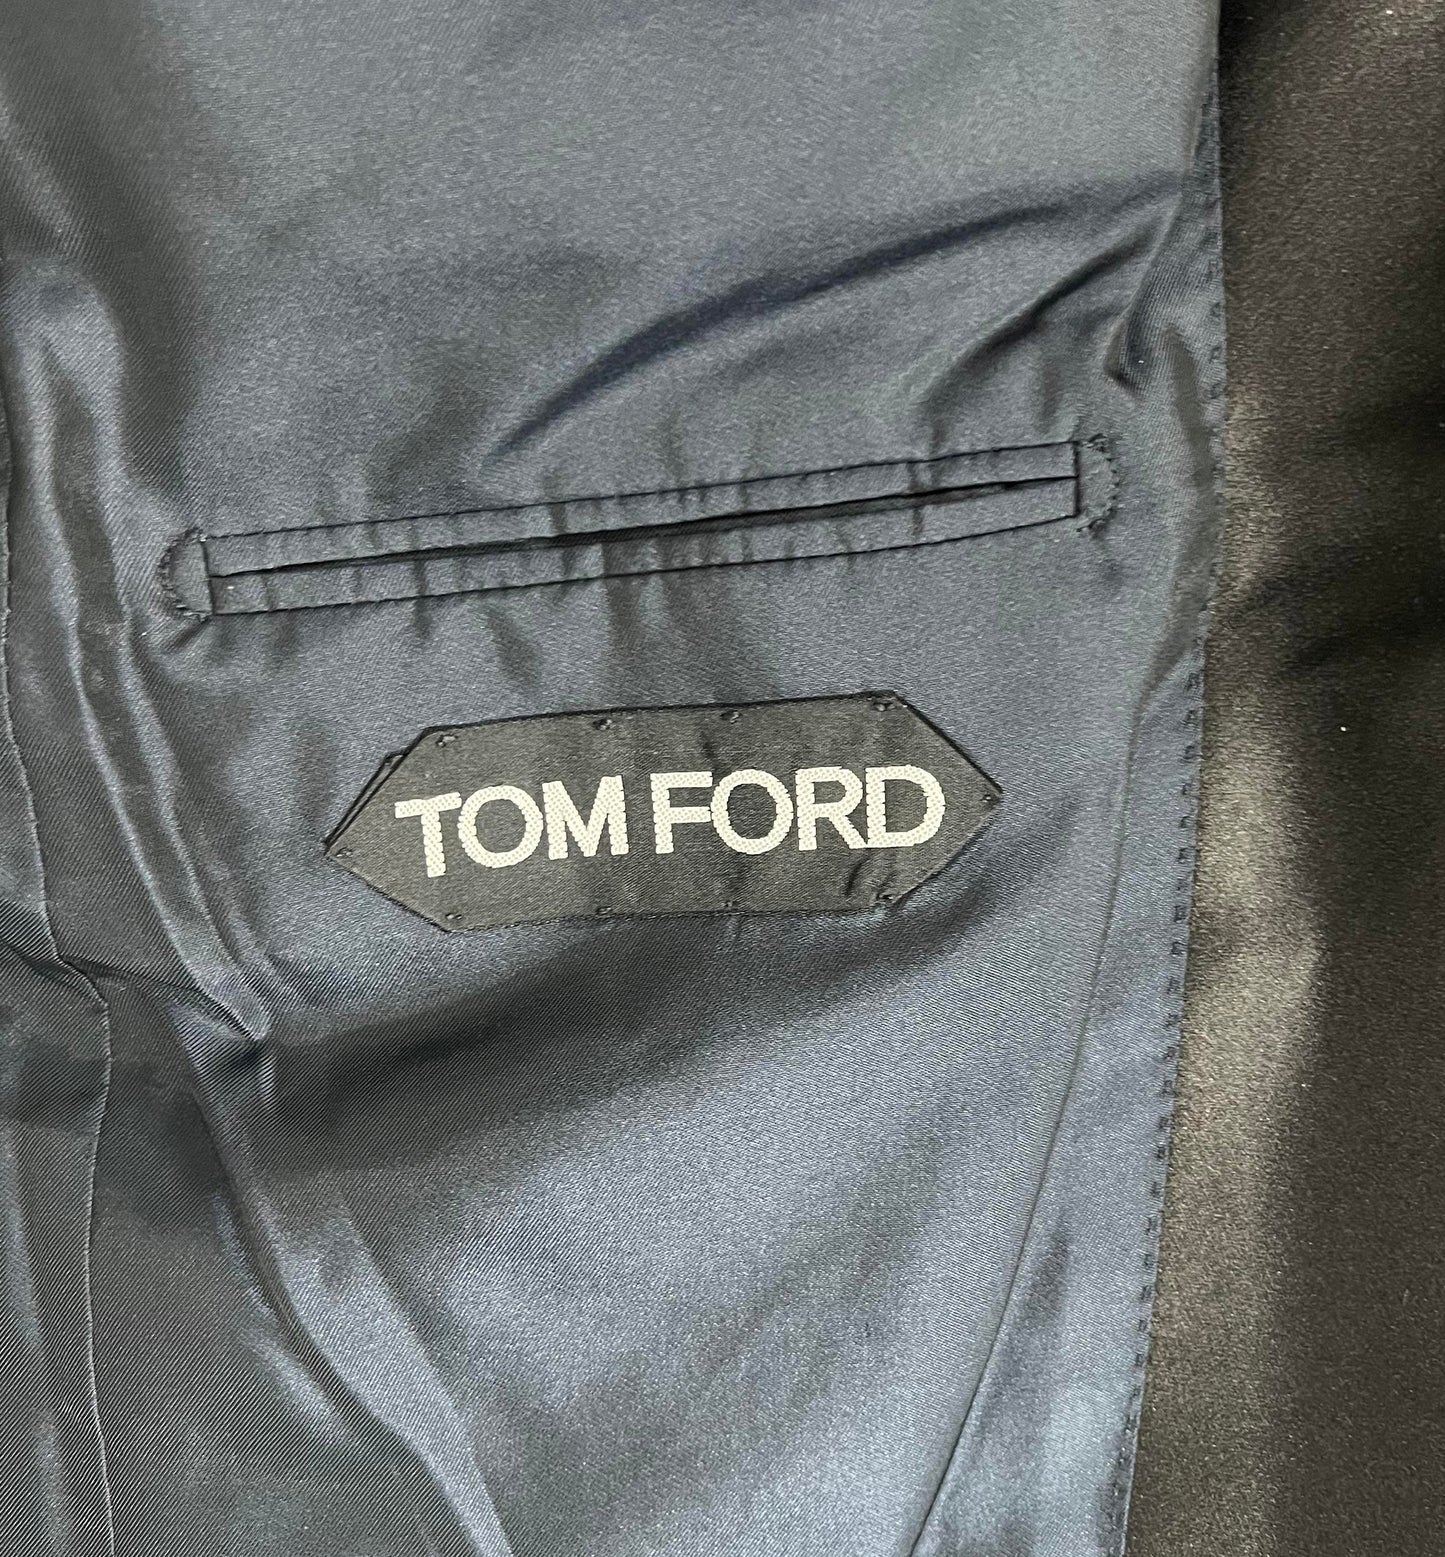 Tom Ford - Wool Twill Tuxedo/Dinner Jacket & Trousers, EU 48R